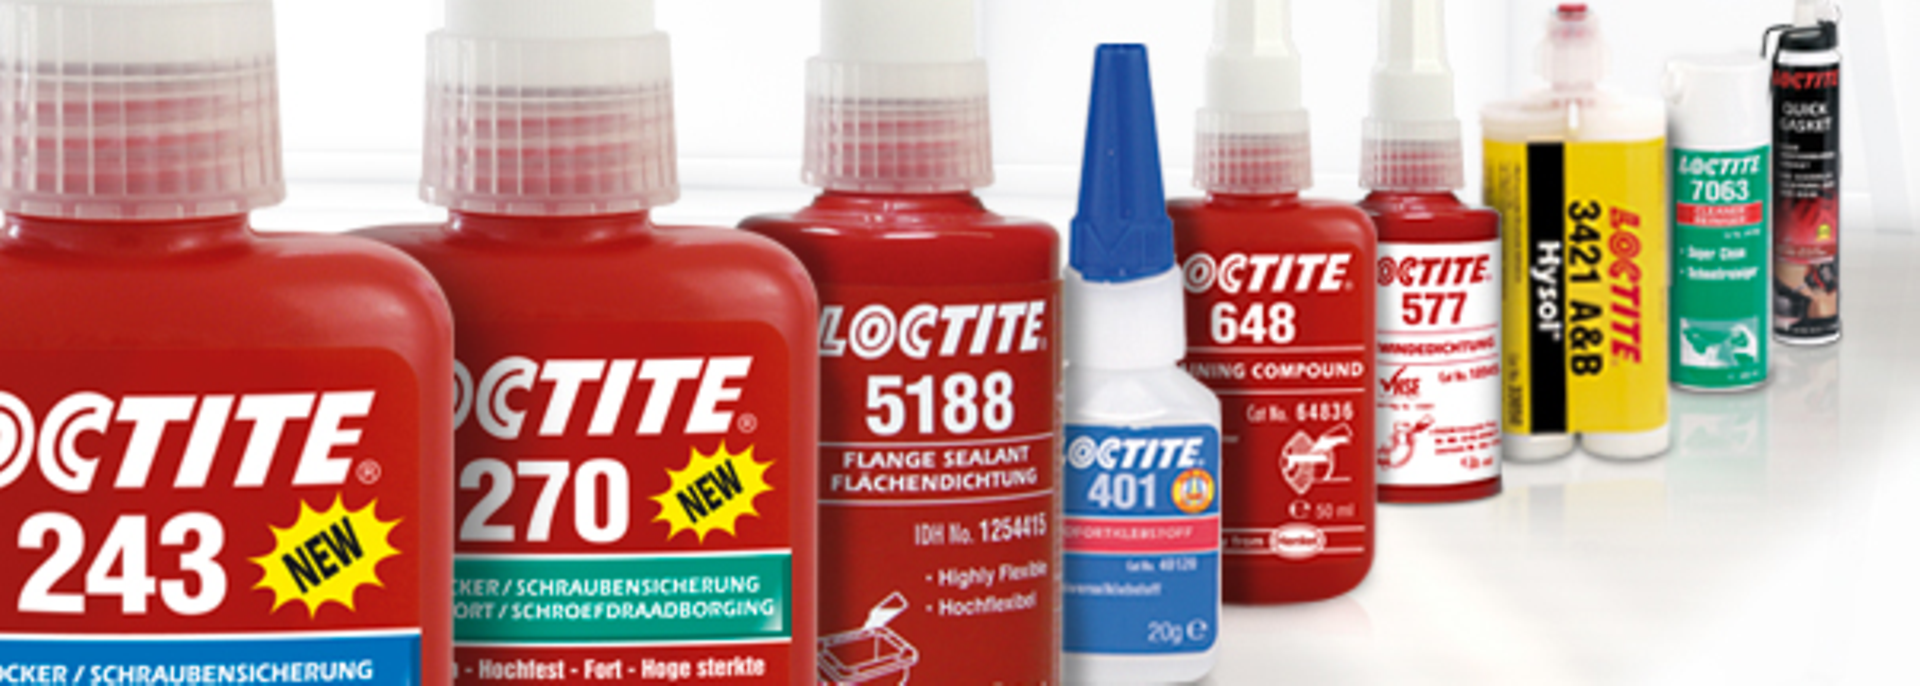 The Adhesive Technologies brand Loctite